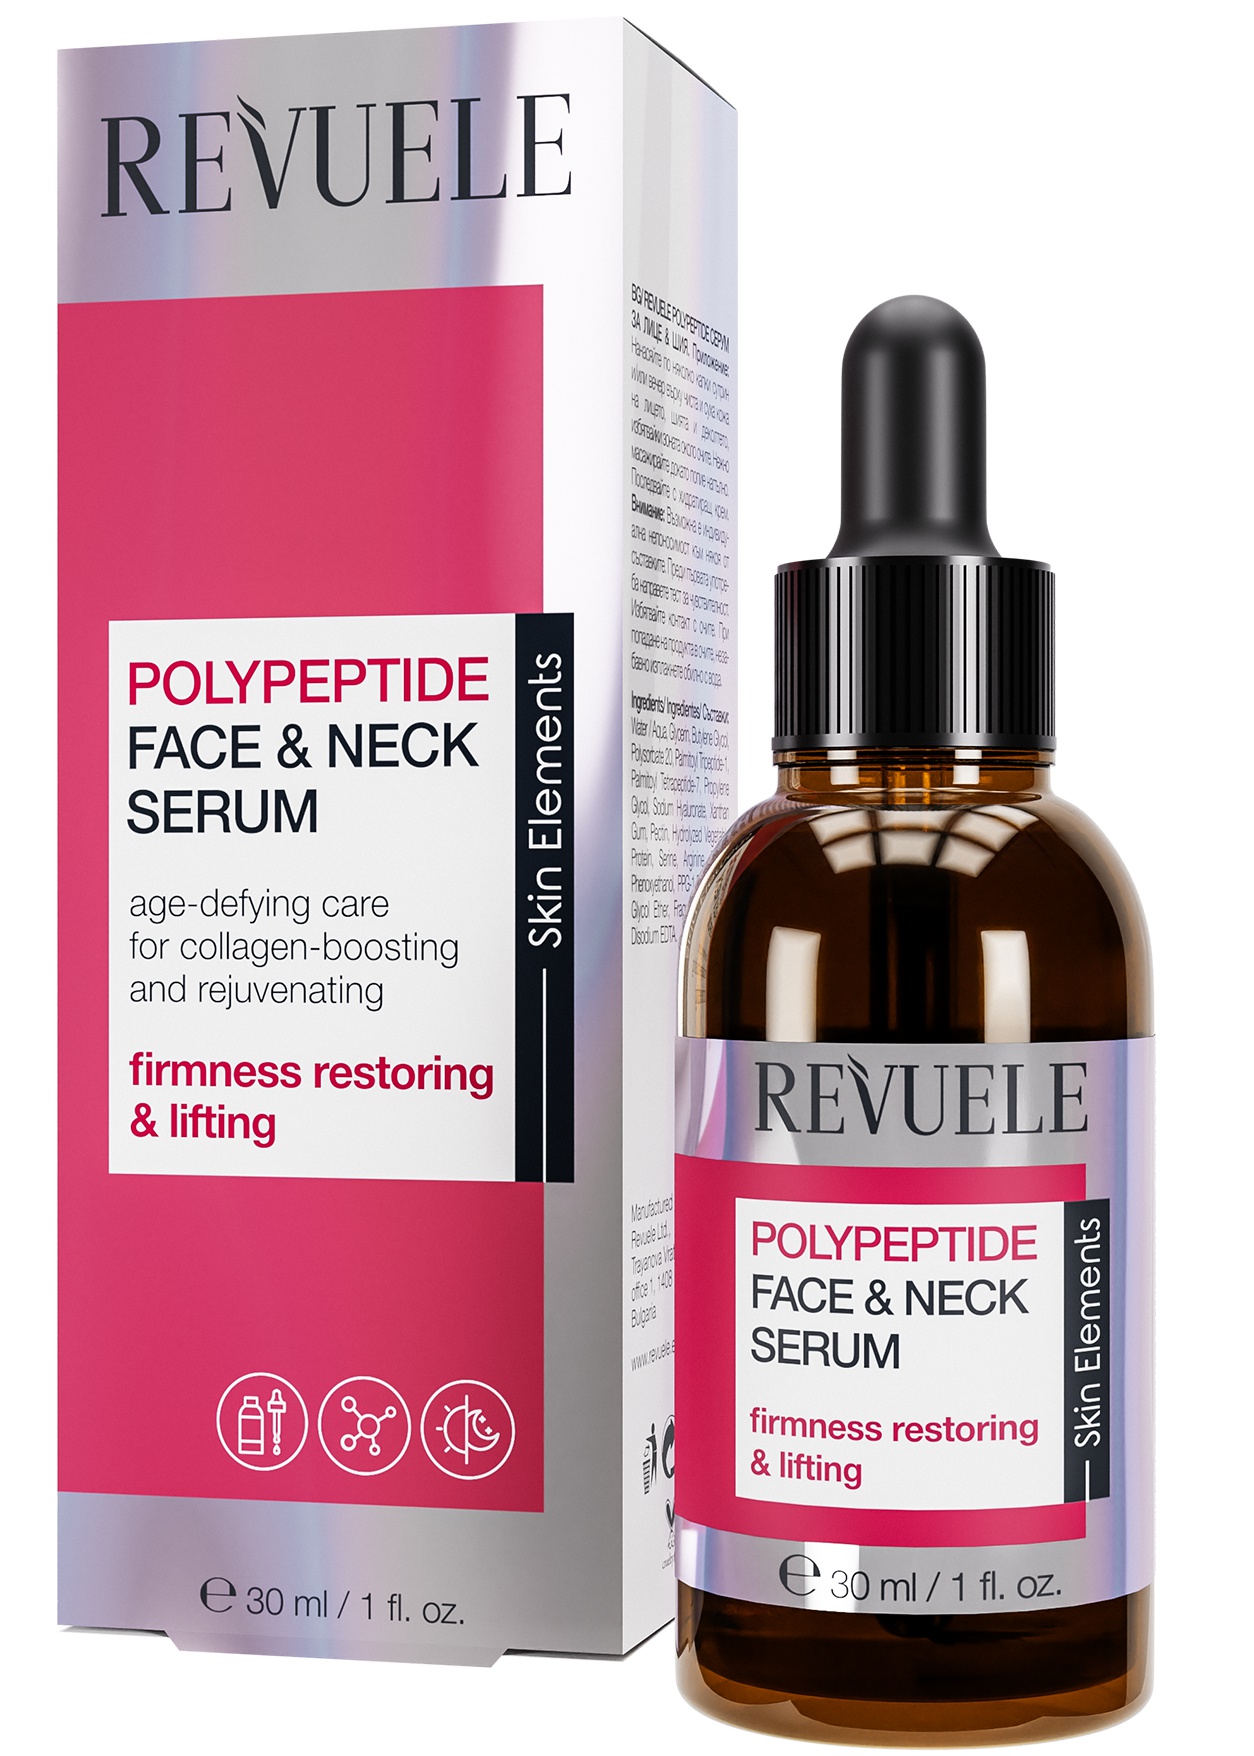 Revuele Polypeptide Face & Neck Serum